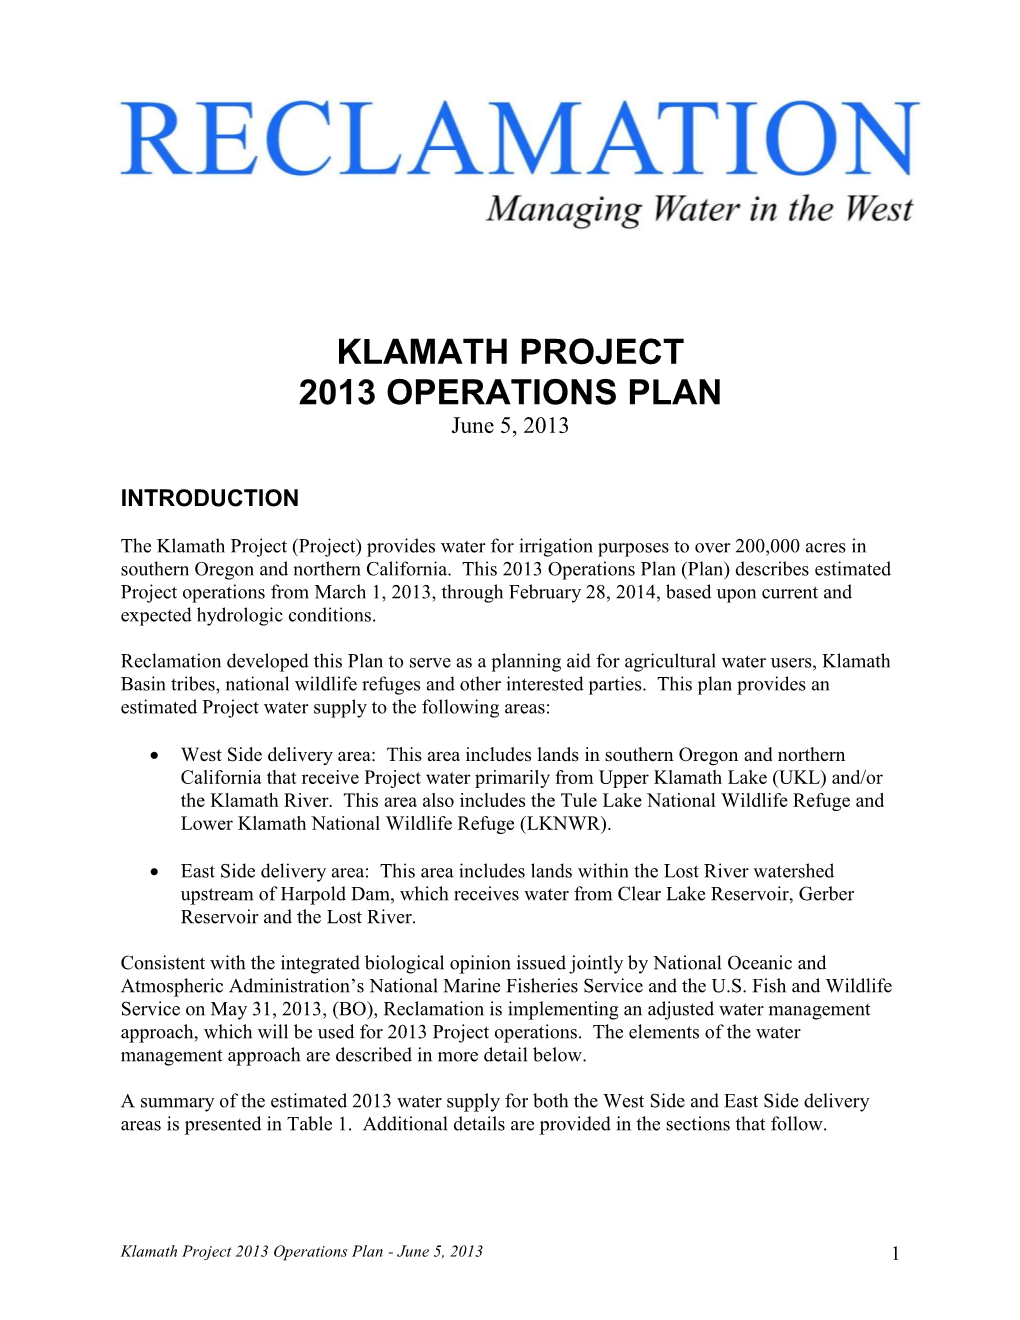 KLAMATH PROJECT 2013 OPERATIONS PLAN June 5, 2013